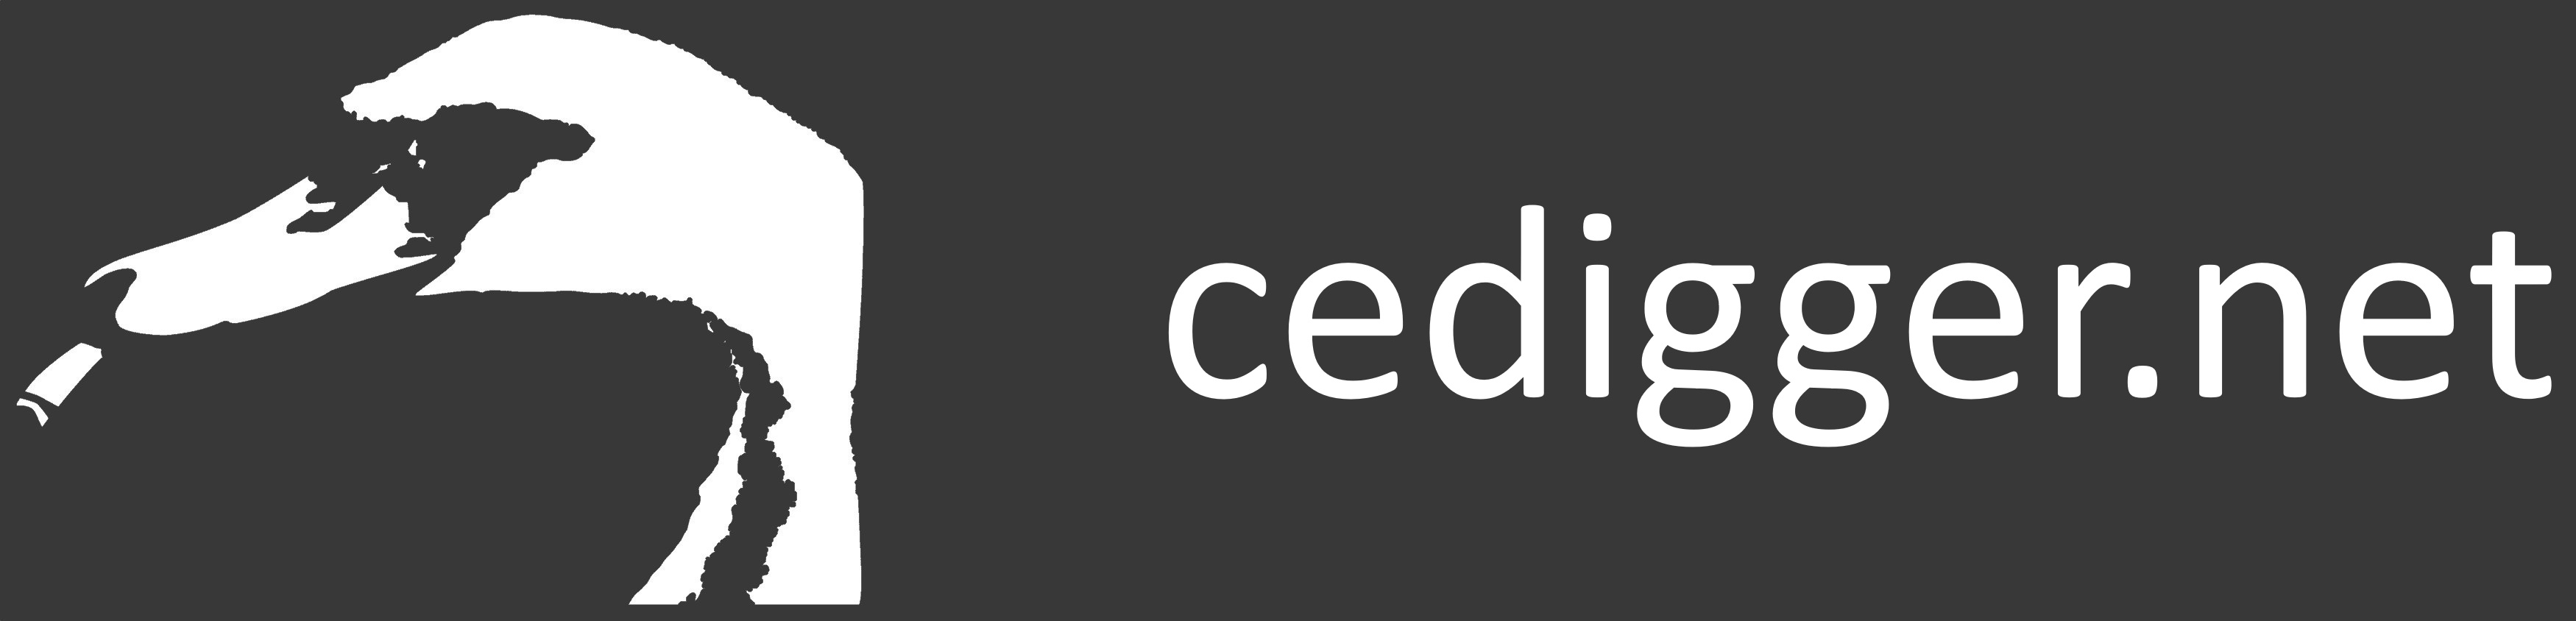 cedigger.net